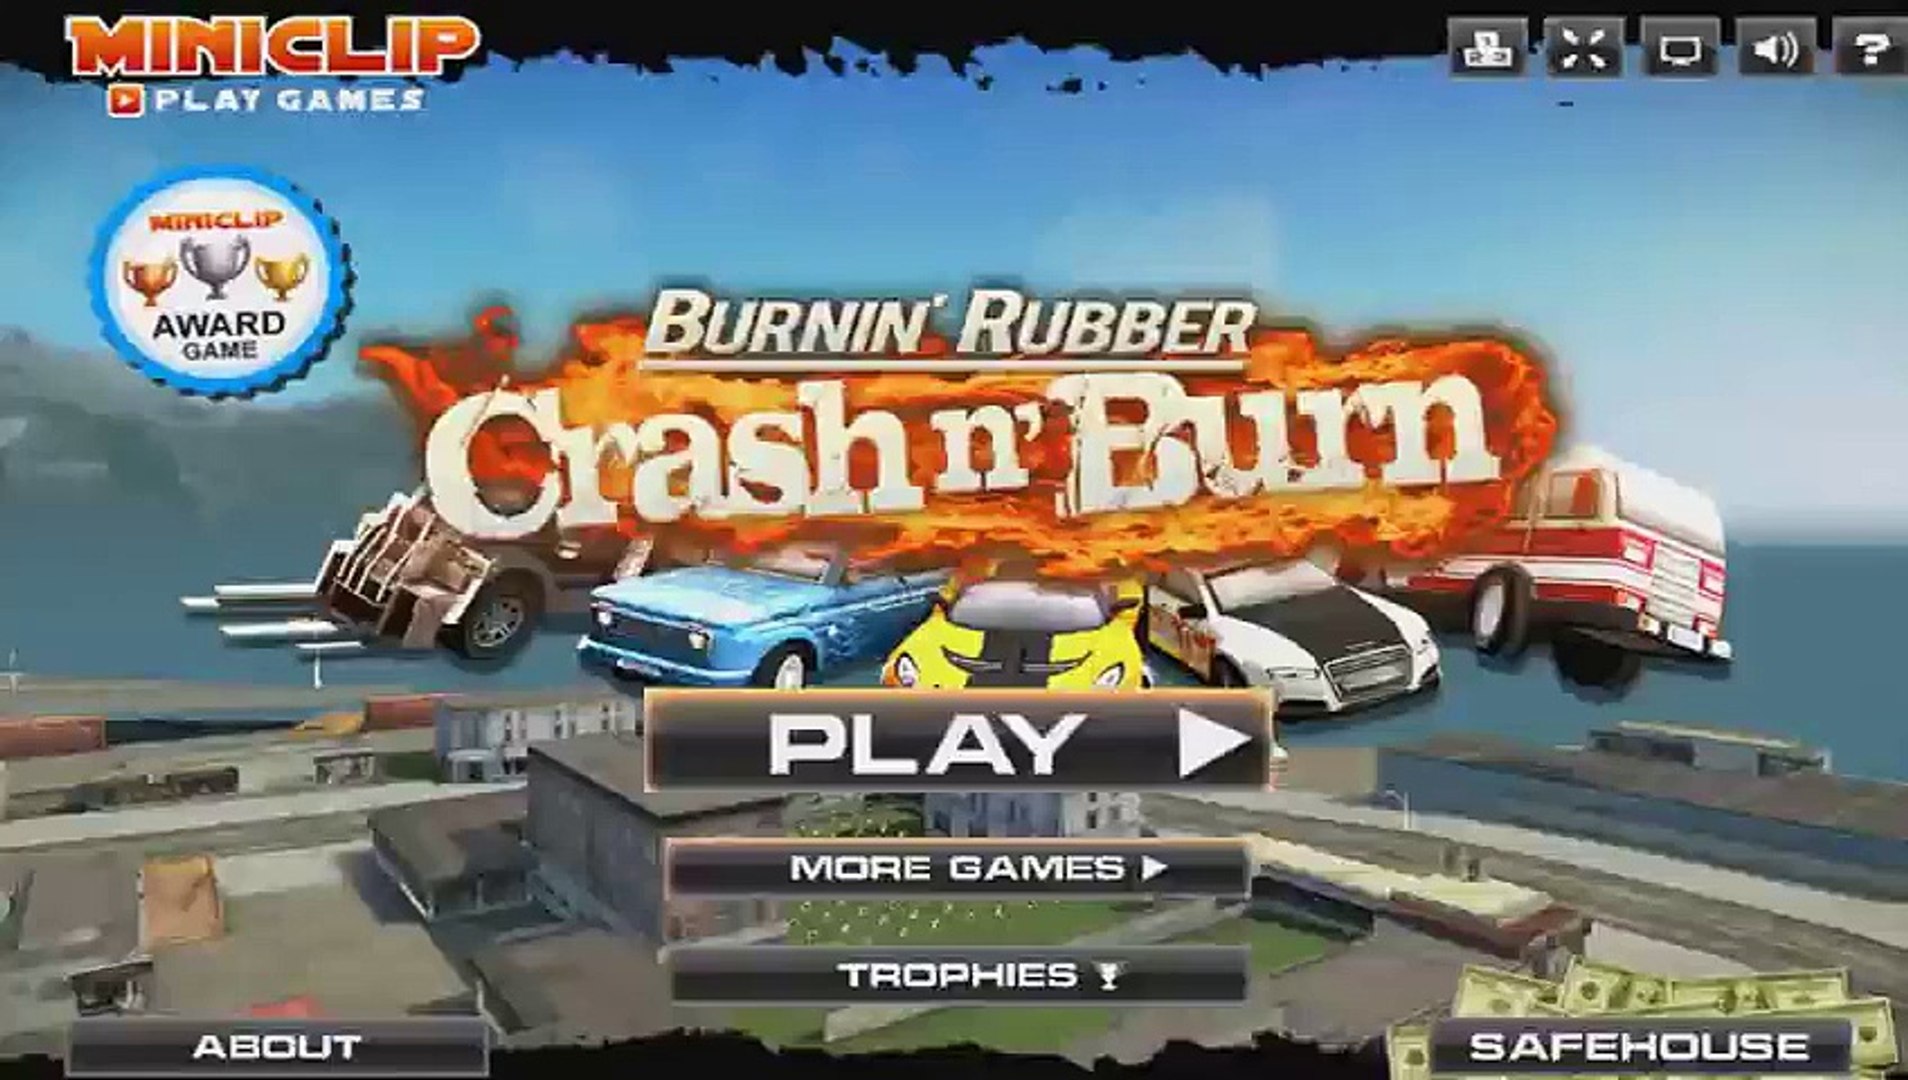 BURNIN' RUBBER CRASH N' BURN - Play for Free!